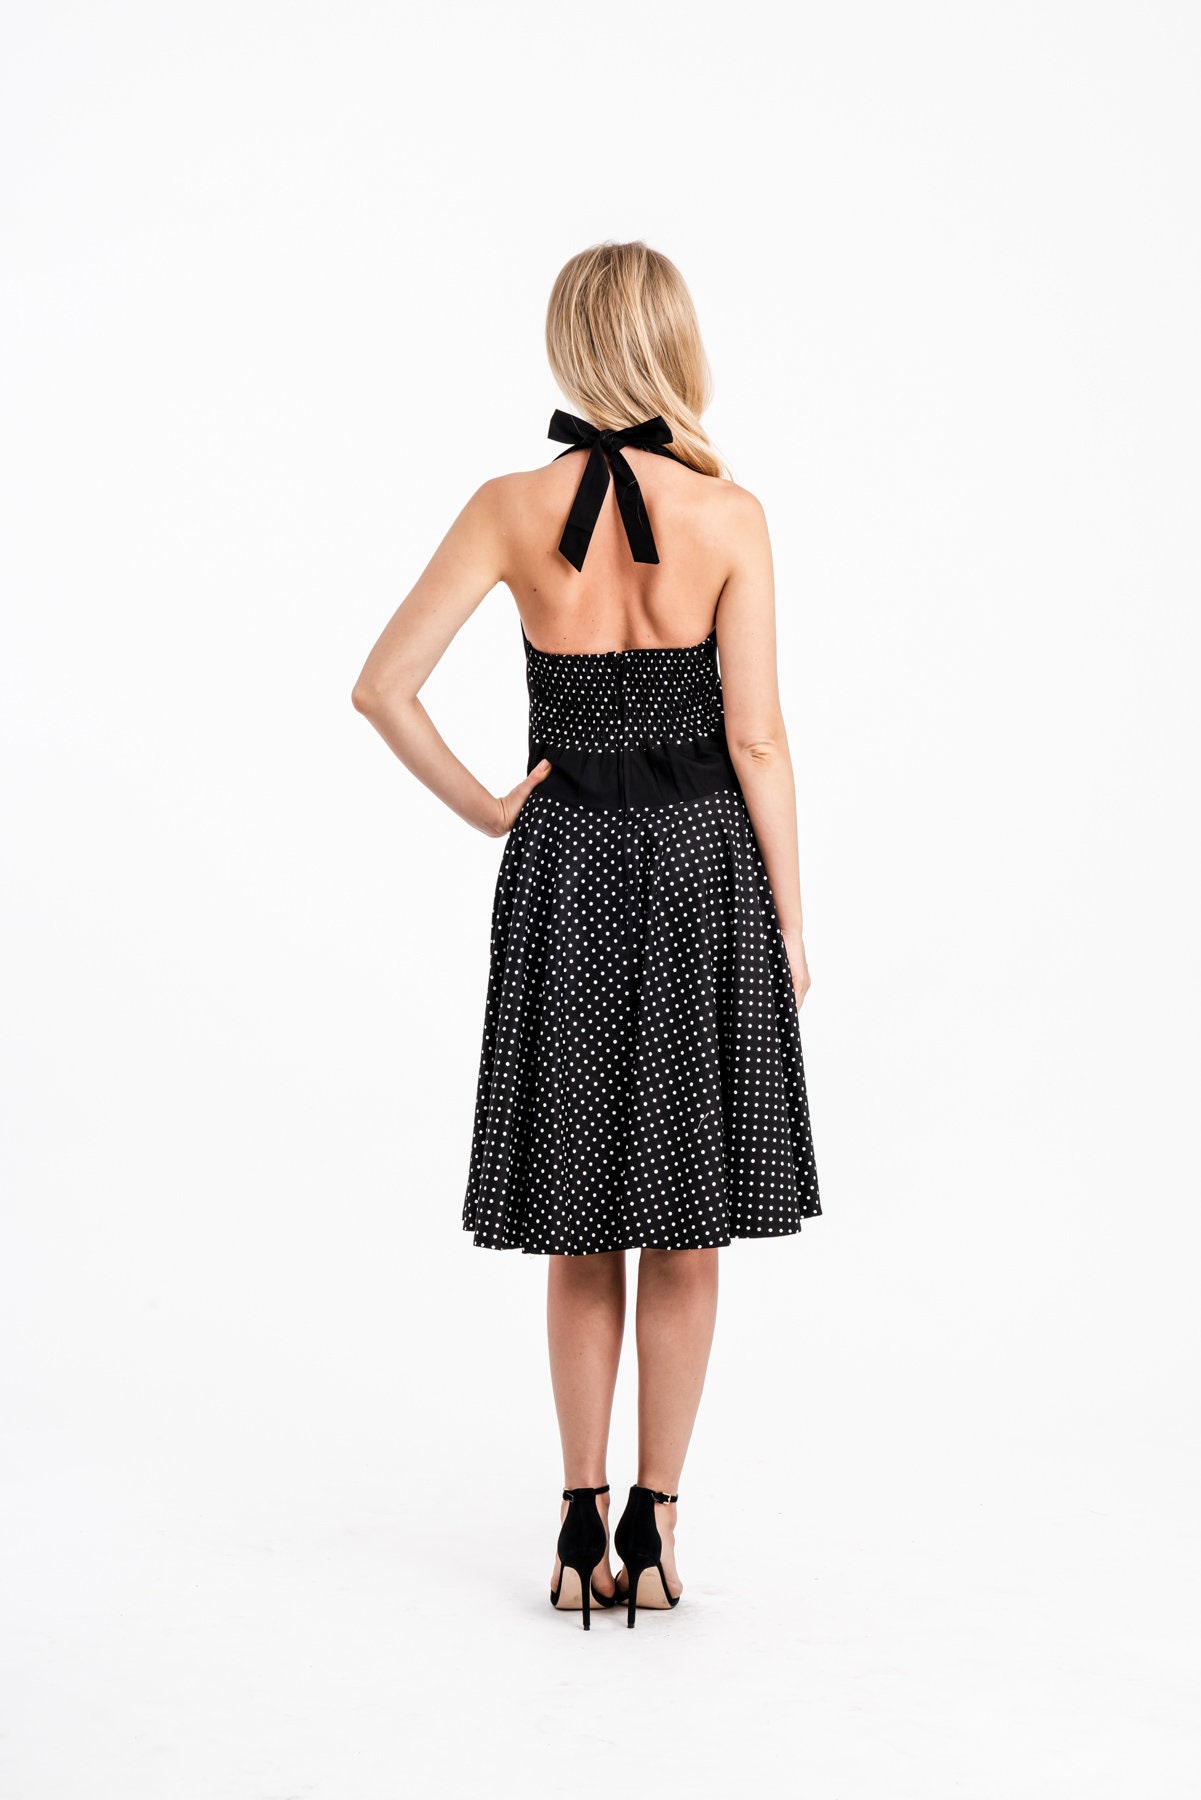 Black Polka Dot Dress Rockabilly Dress White Mini Dots Vintage | Etsy